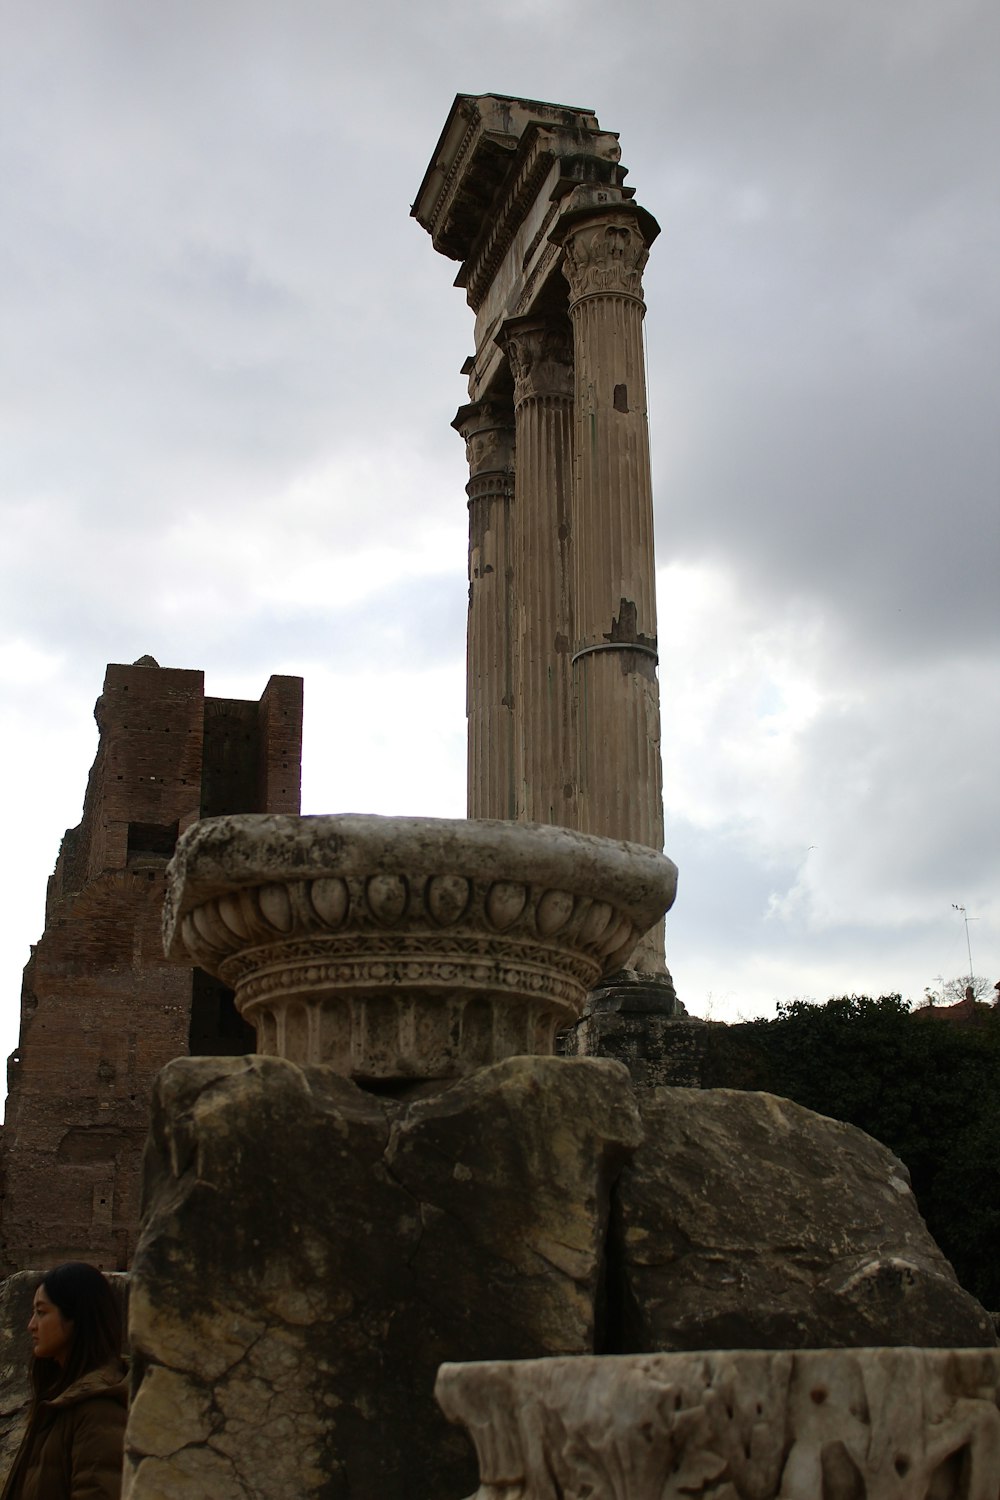 a tall stone pillar sitting next to a tall building